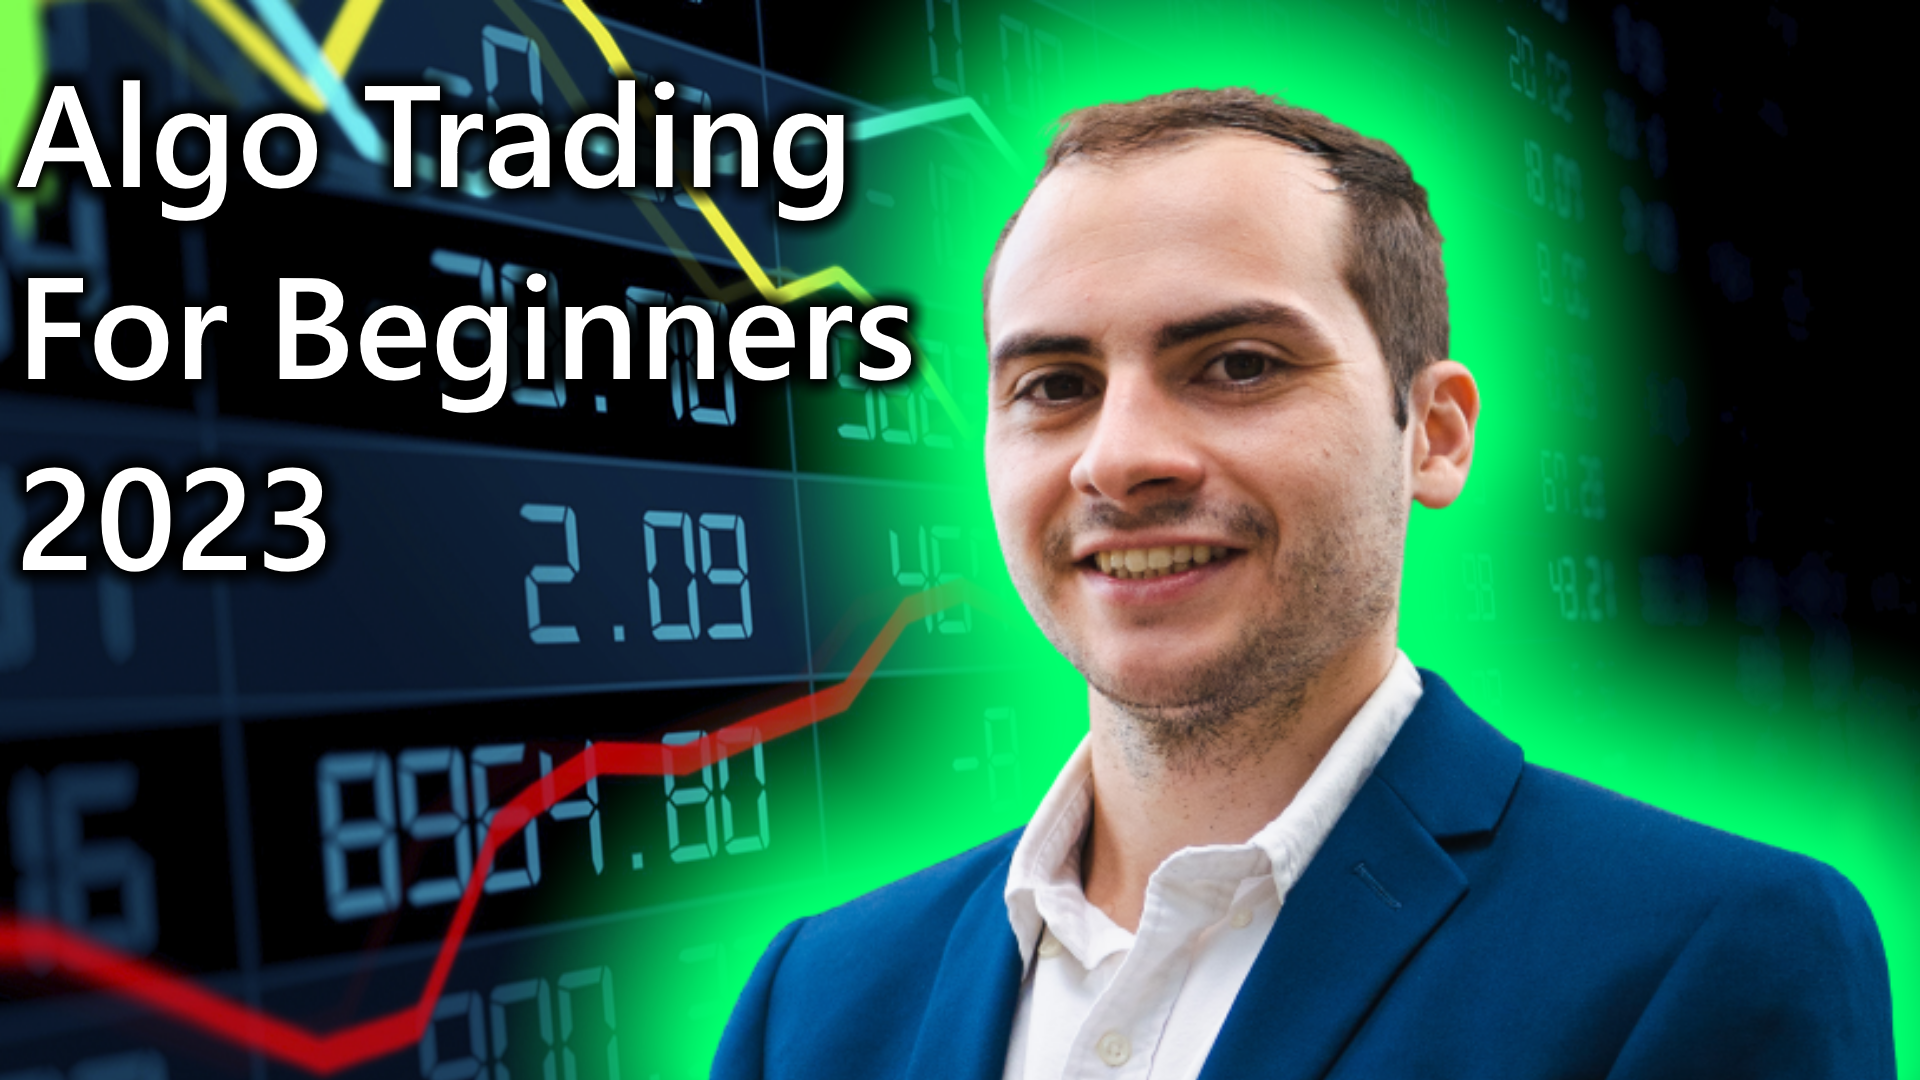 Algo Trading For Beginners 2023